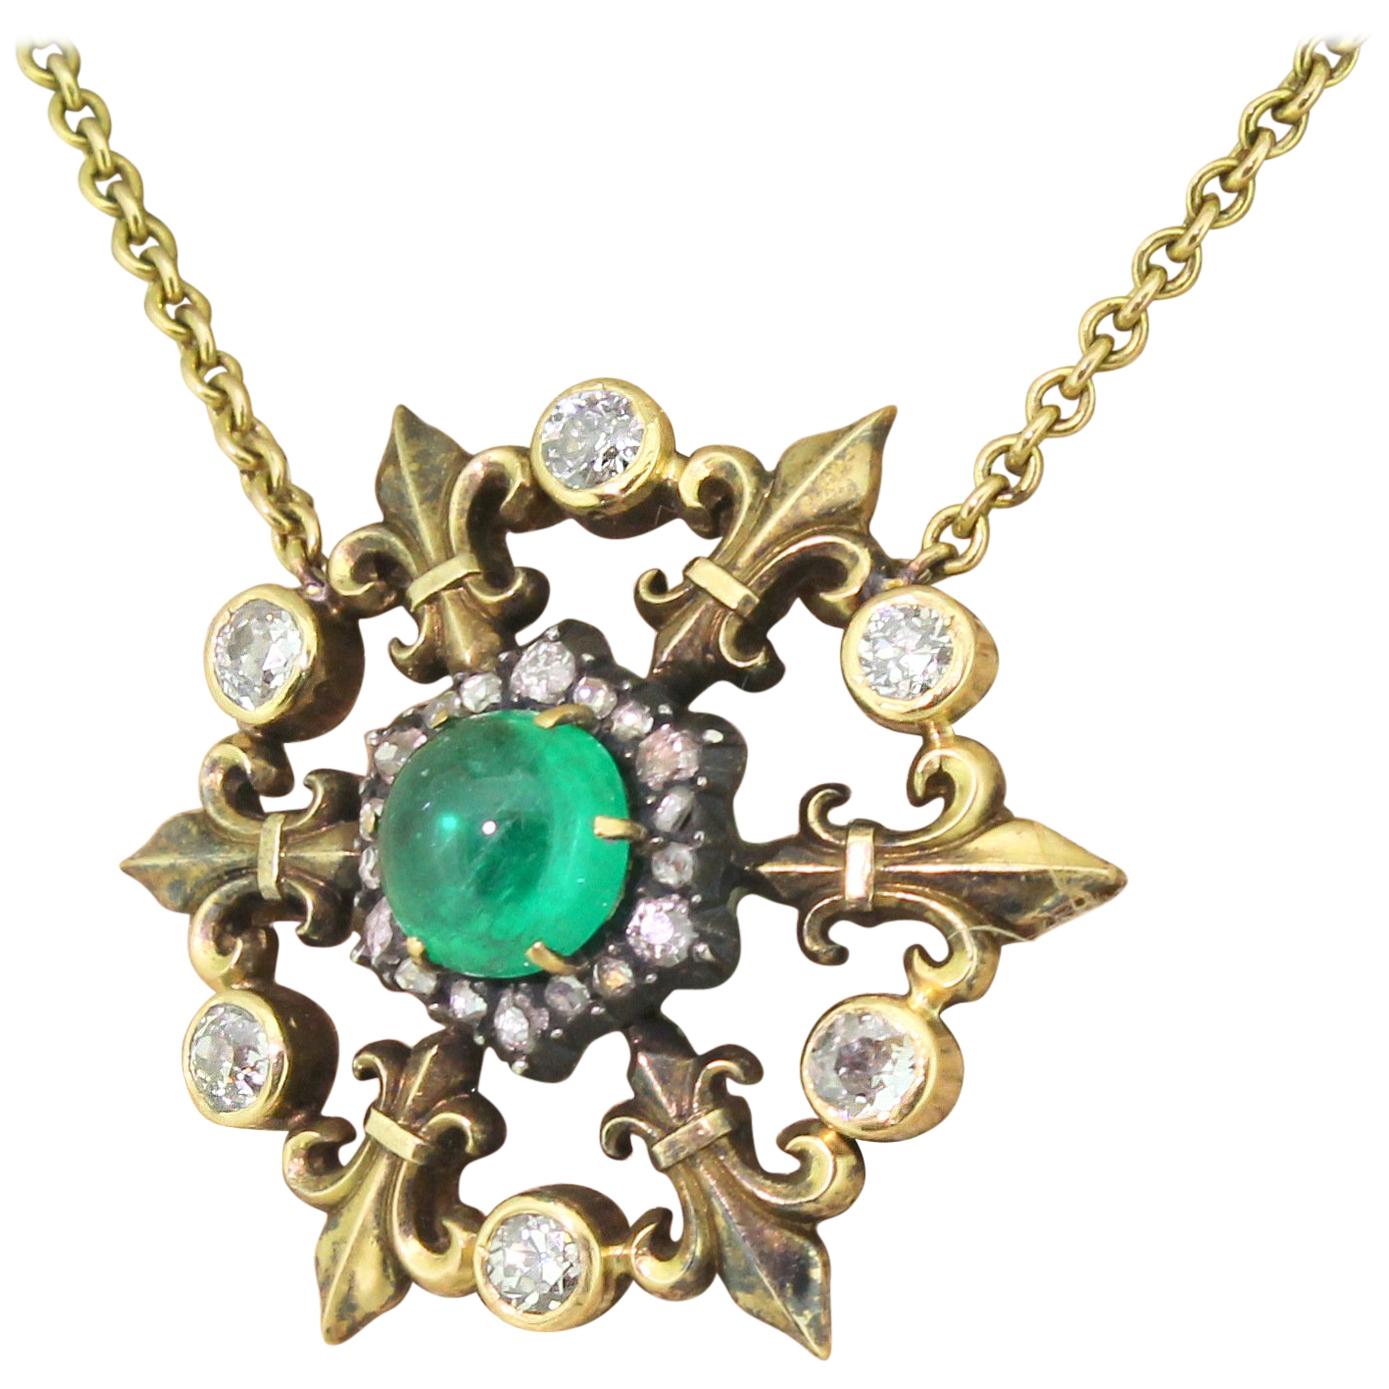 Victorian 1.88 Carat Cabochon Emerald and Diamond Pendant Necklace